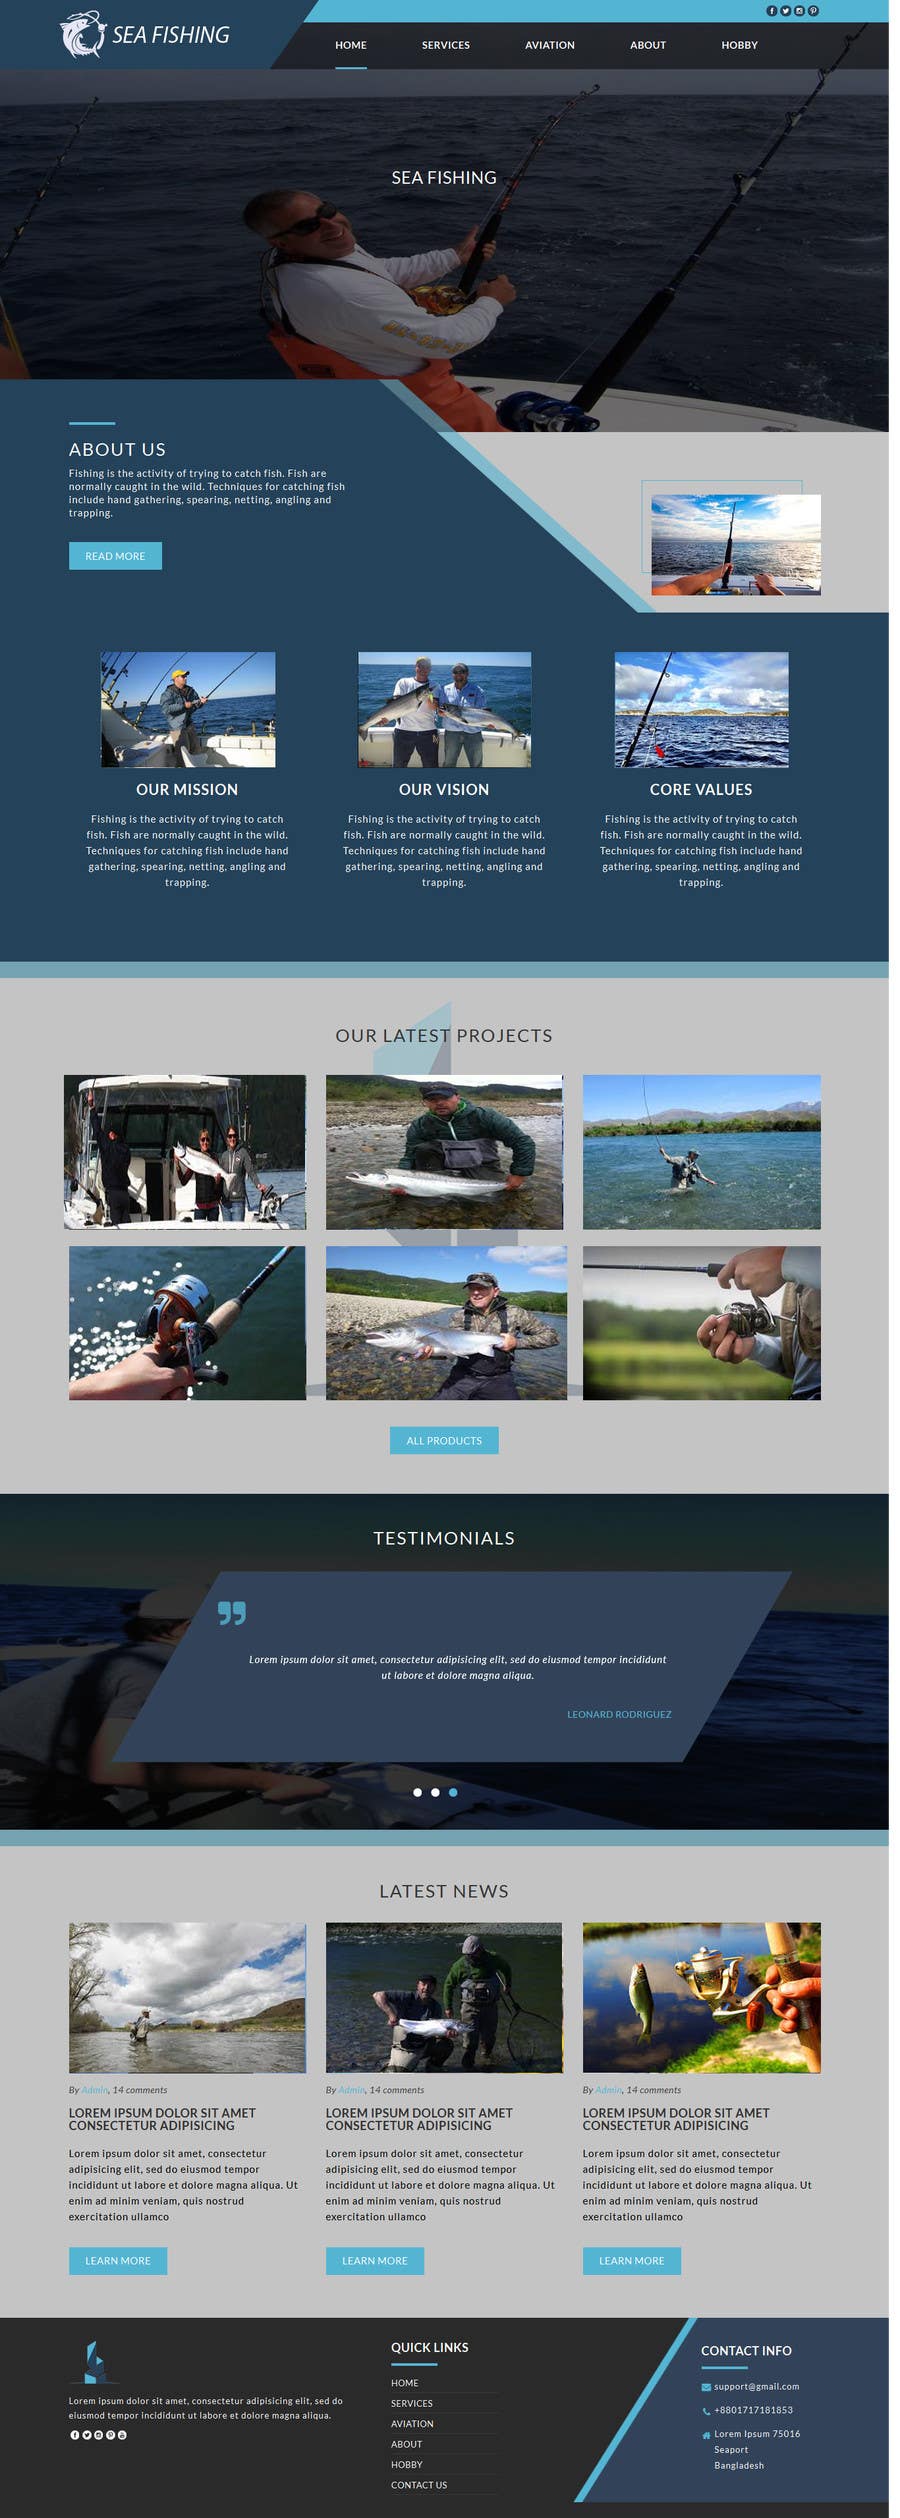 Penyertaan Peraduan #5 untuk                                                 Design a Website Template with a Fishing Theme
                                            